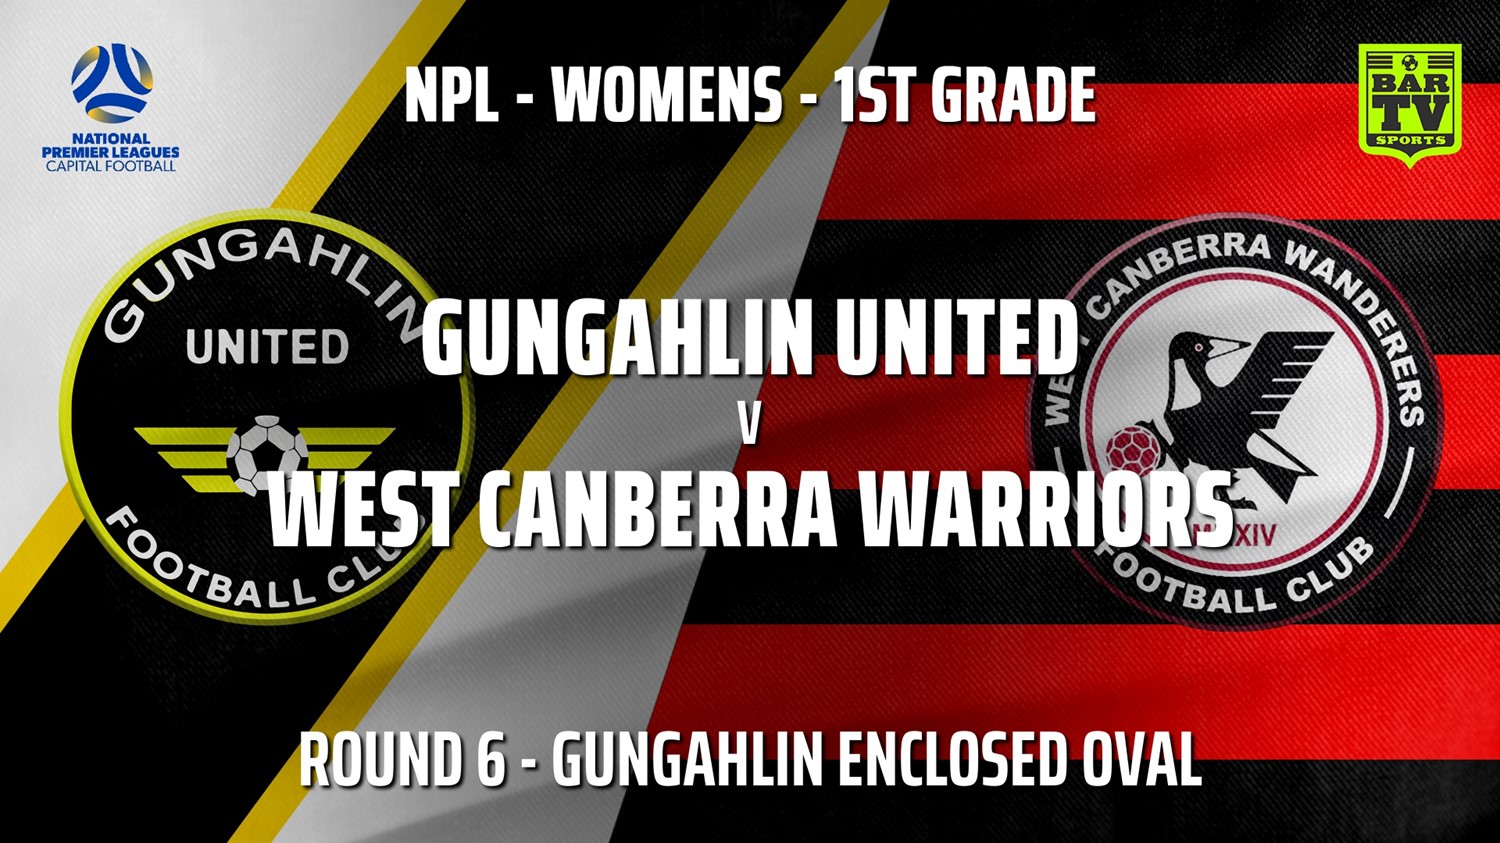 210516-NPLW - Capital Round 6 - Gungahlin United FC (women) v West Canberra Warriors FC (women) Minigame Slate Image